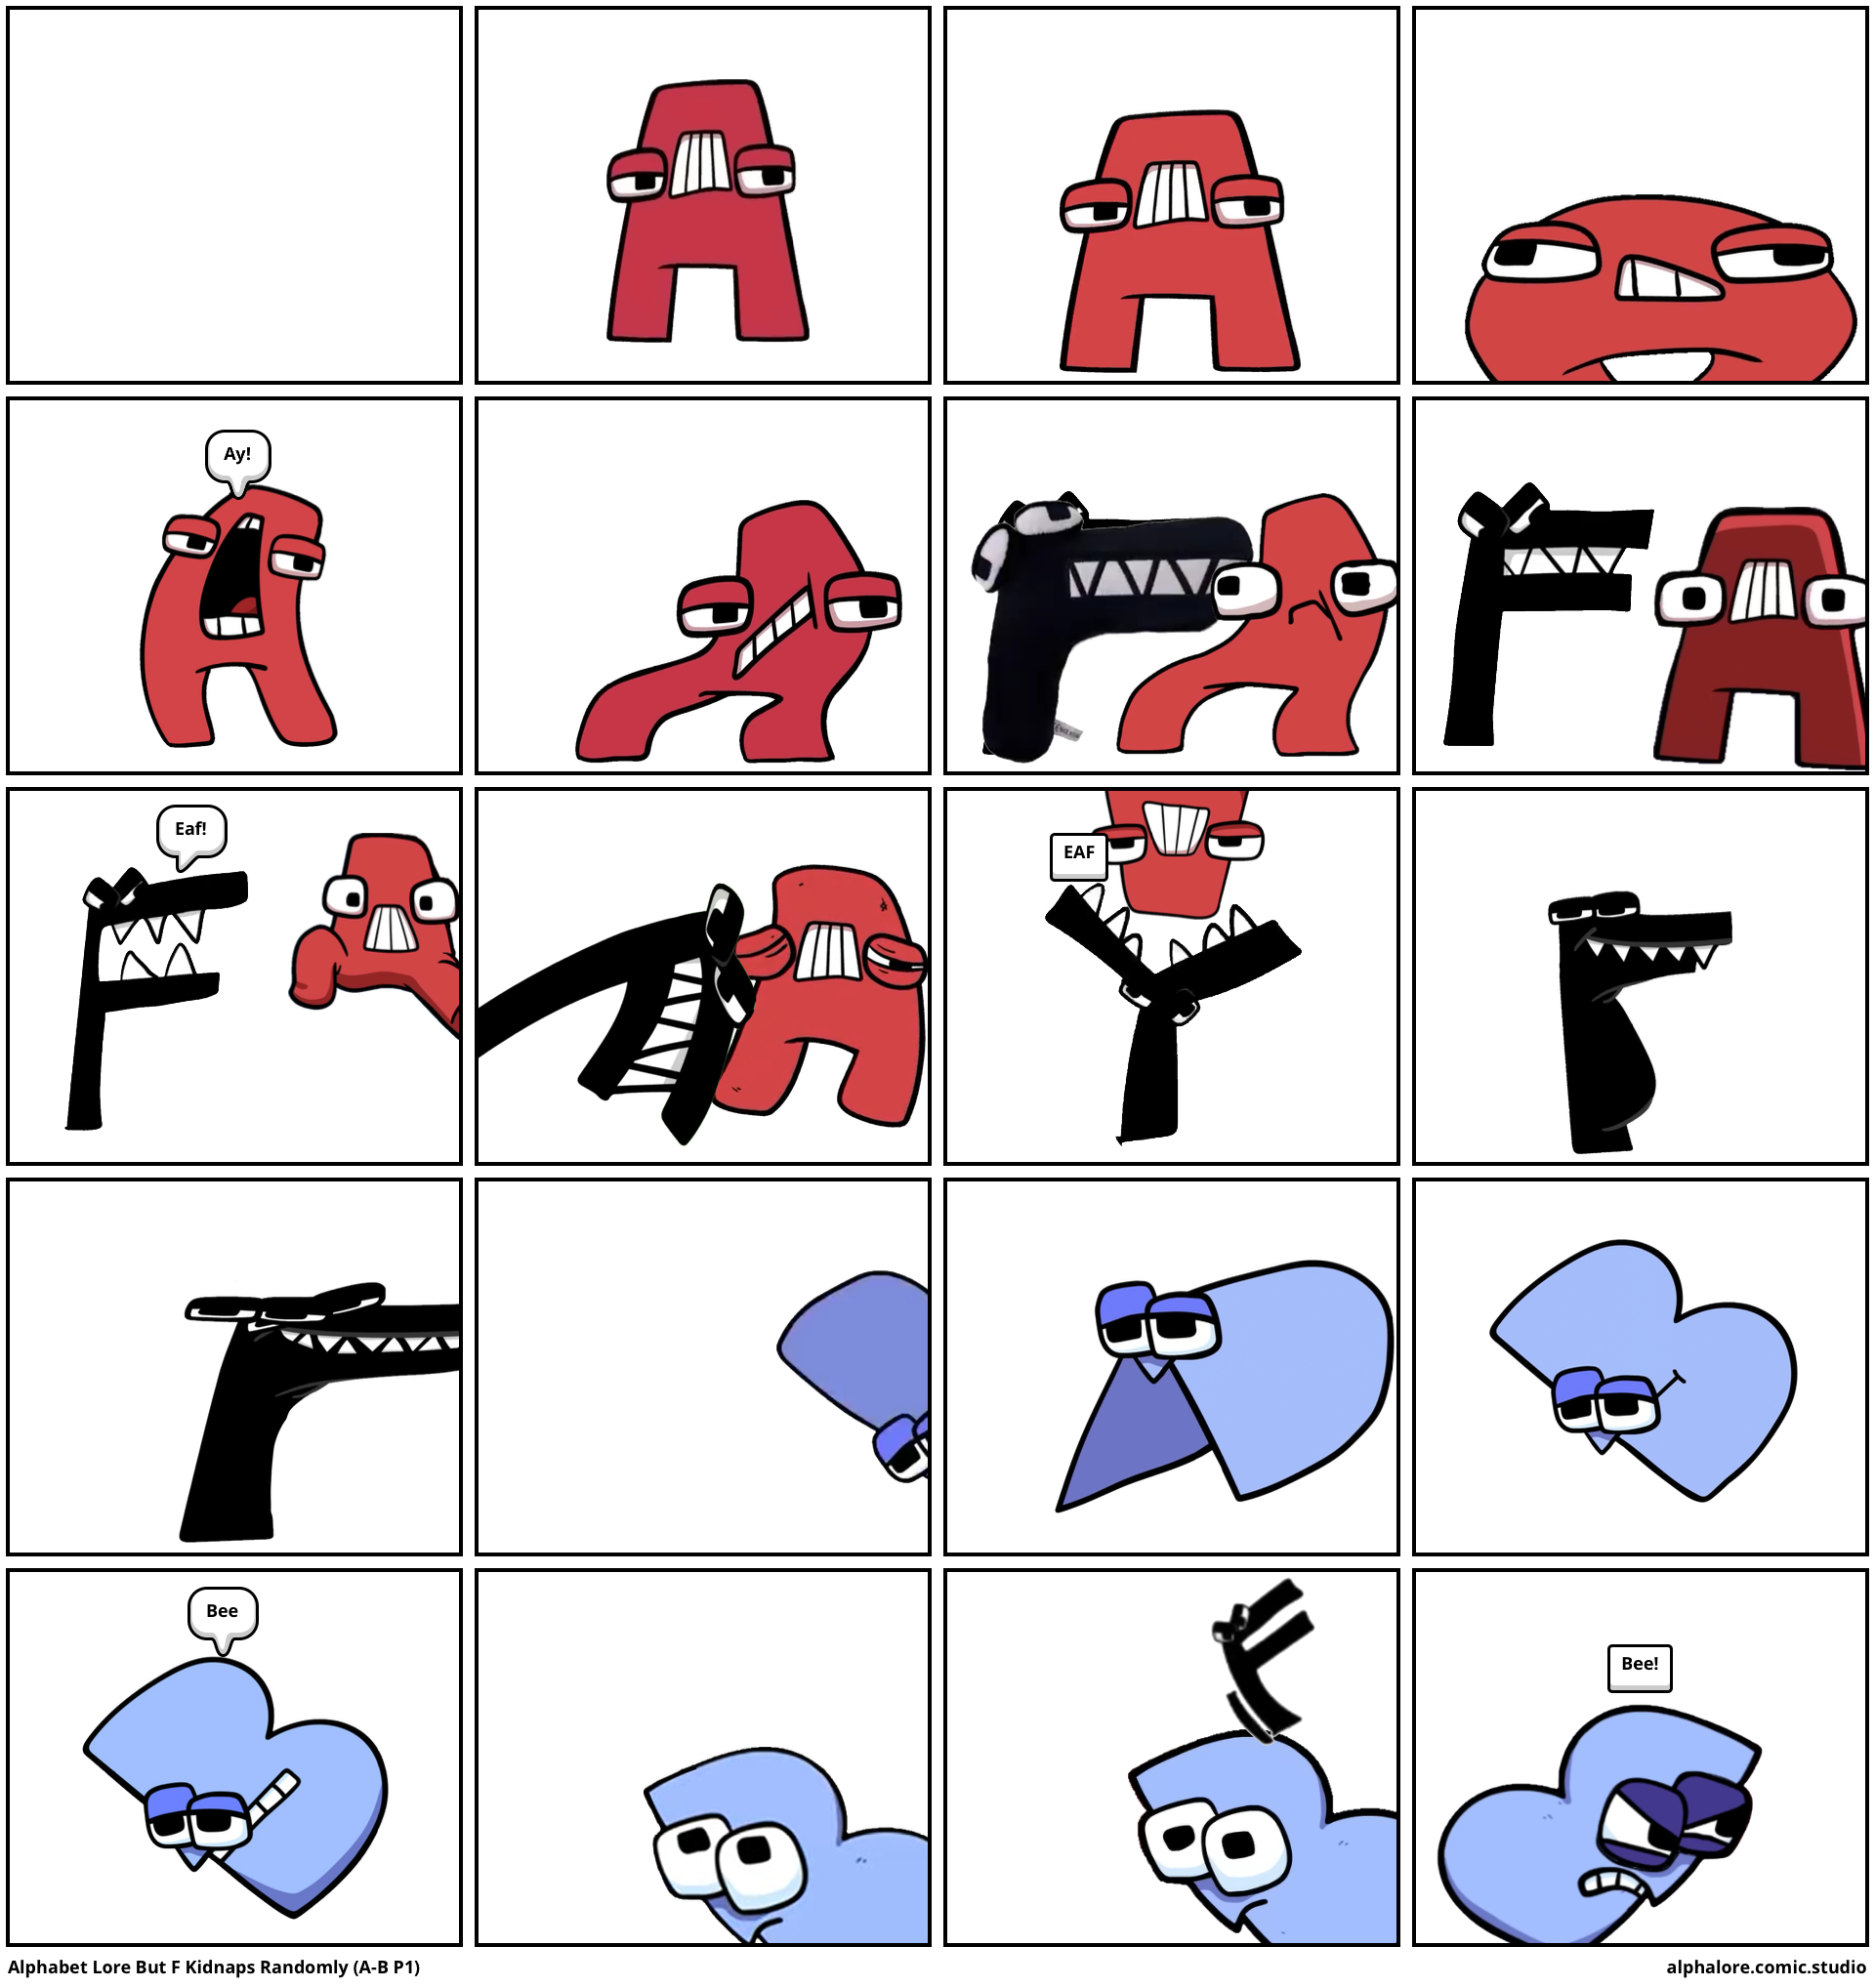 Alphabet Lore But F Kidnaps Randomly (A-B P1) - Comic Studio